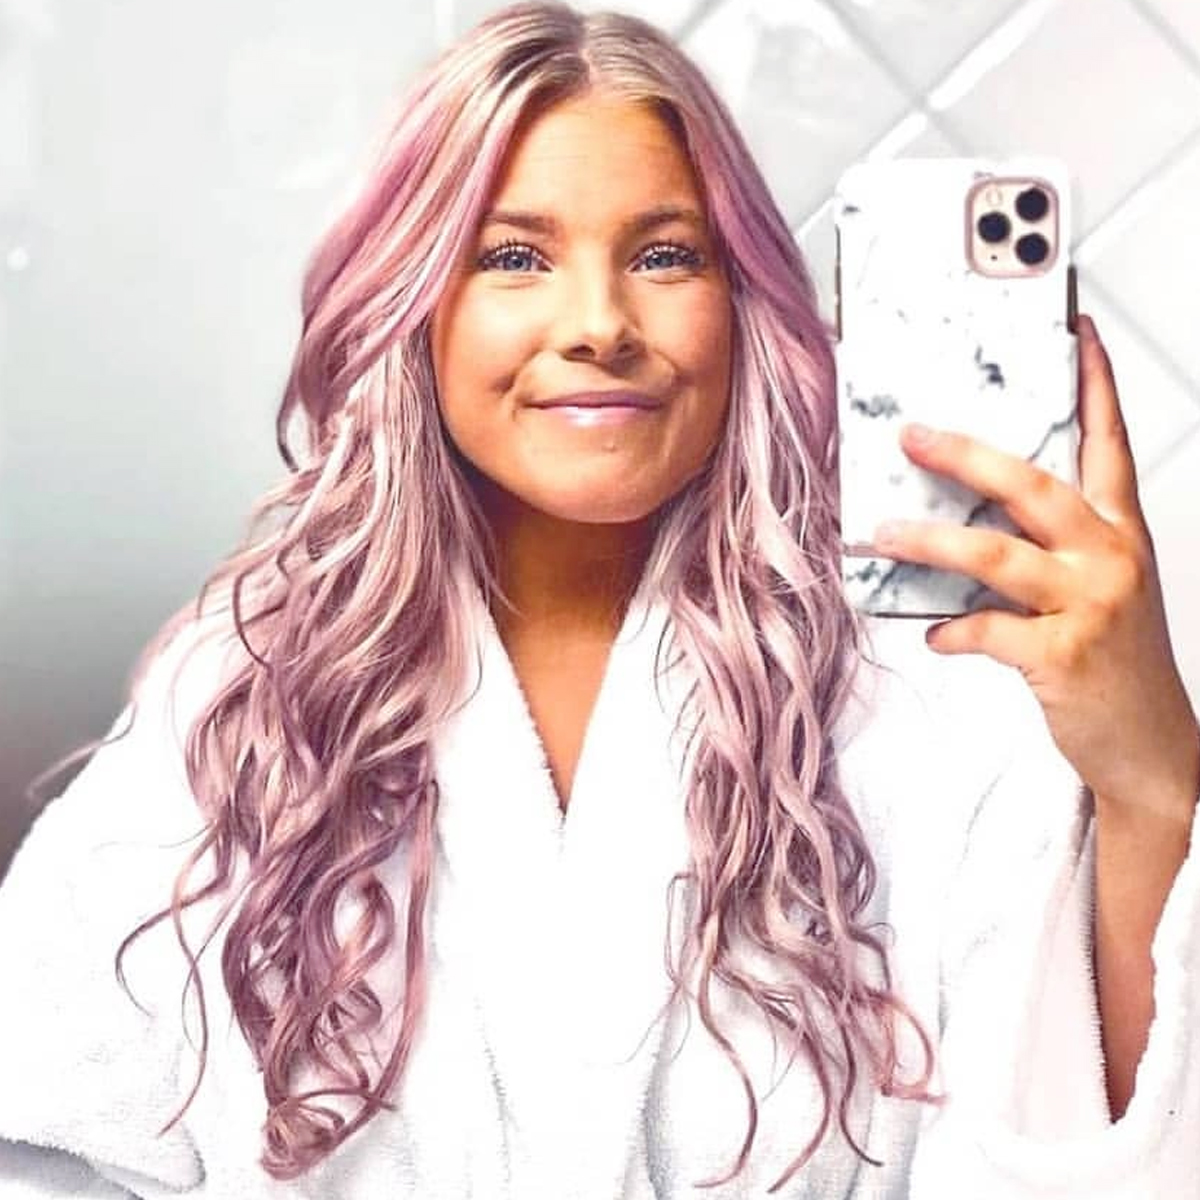 light pink hair